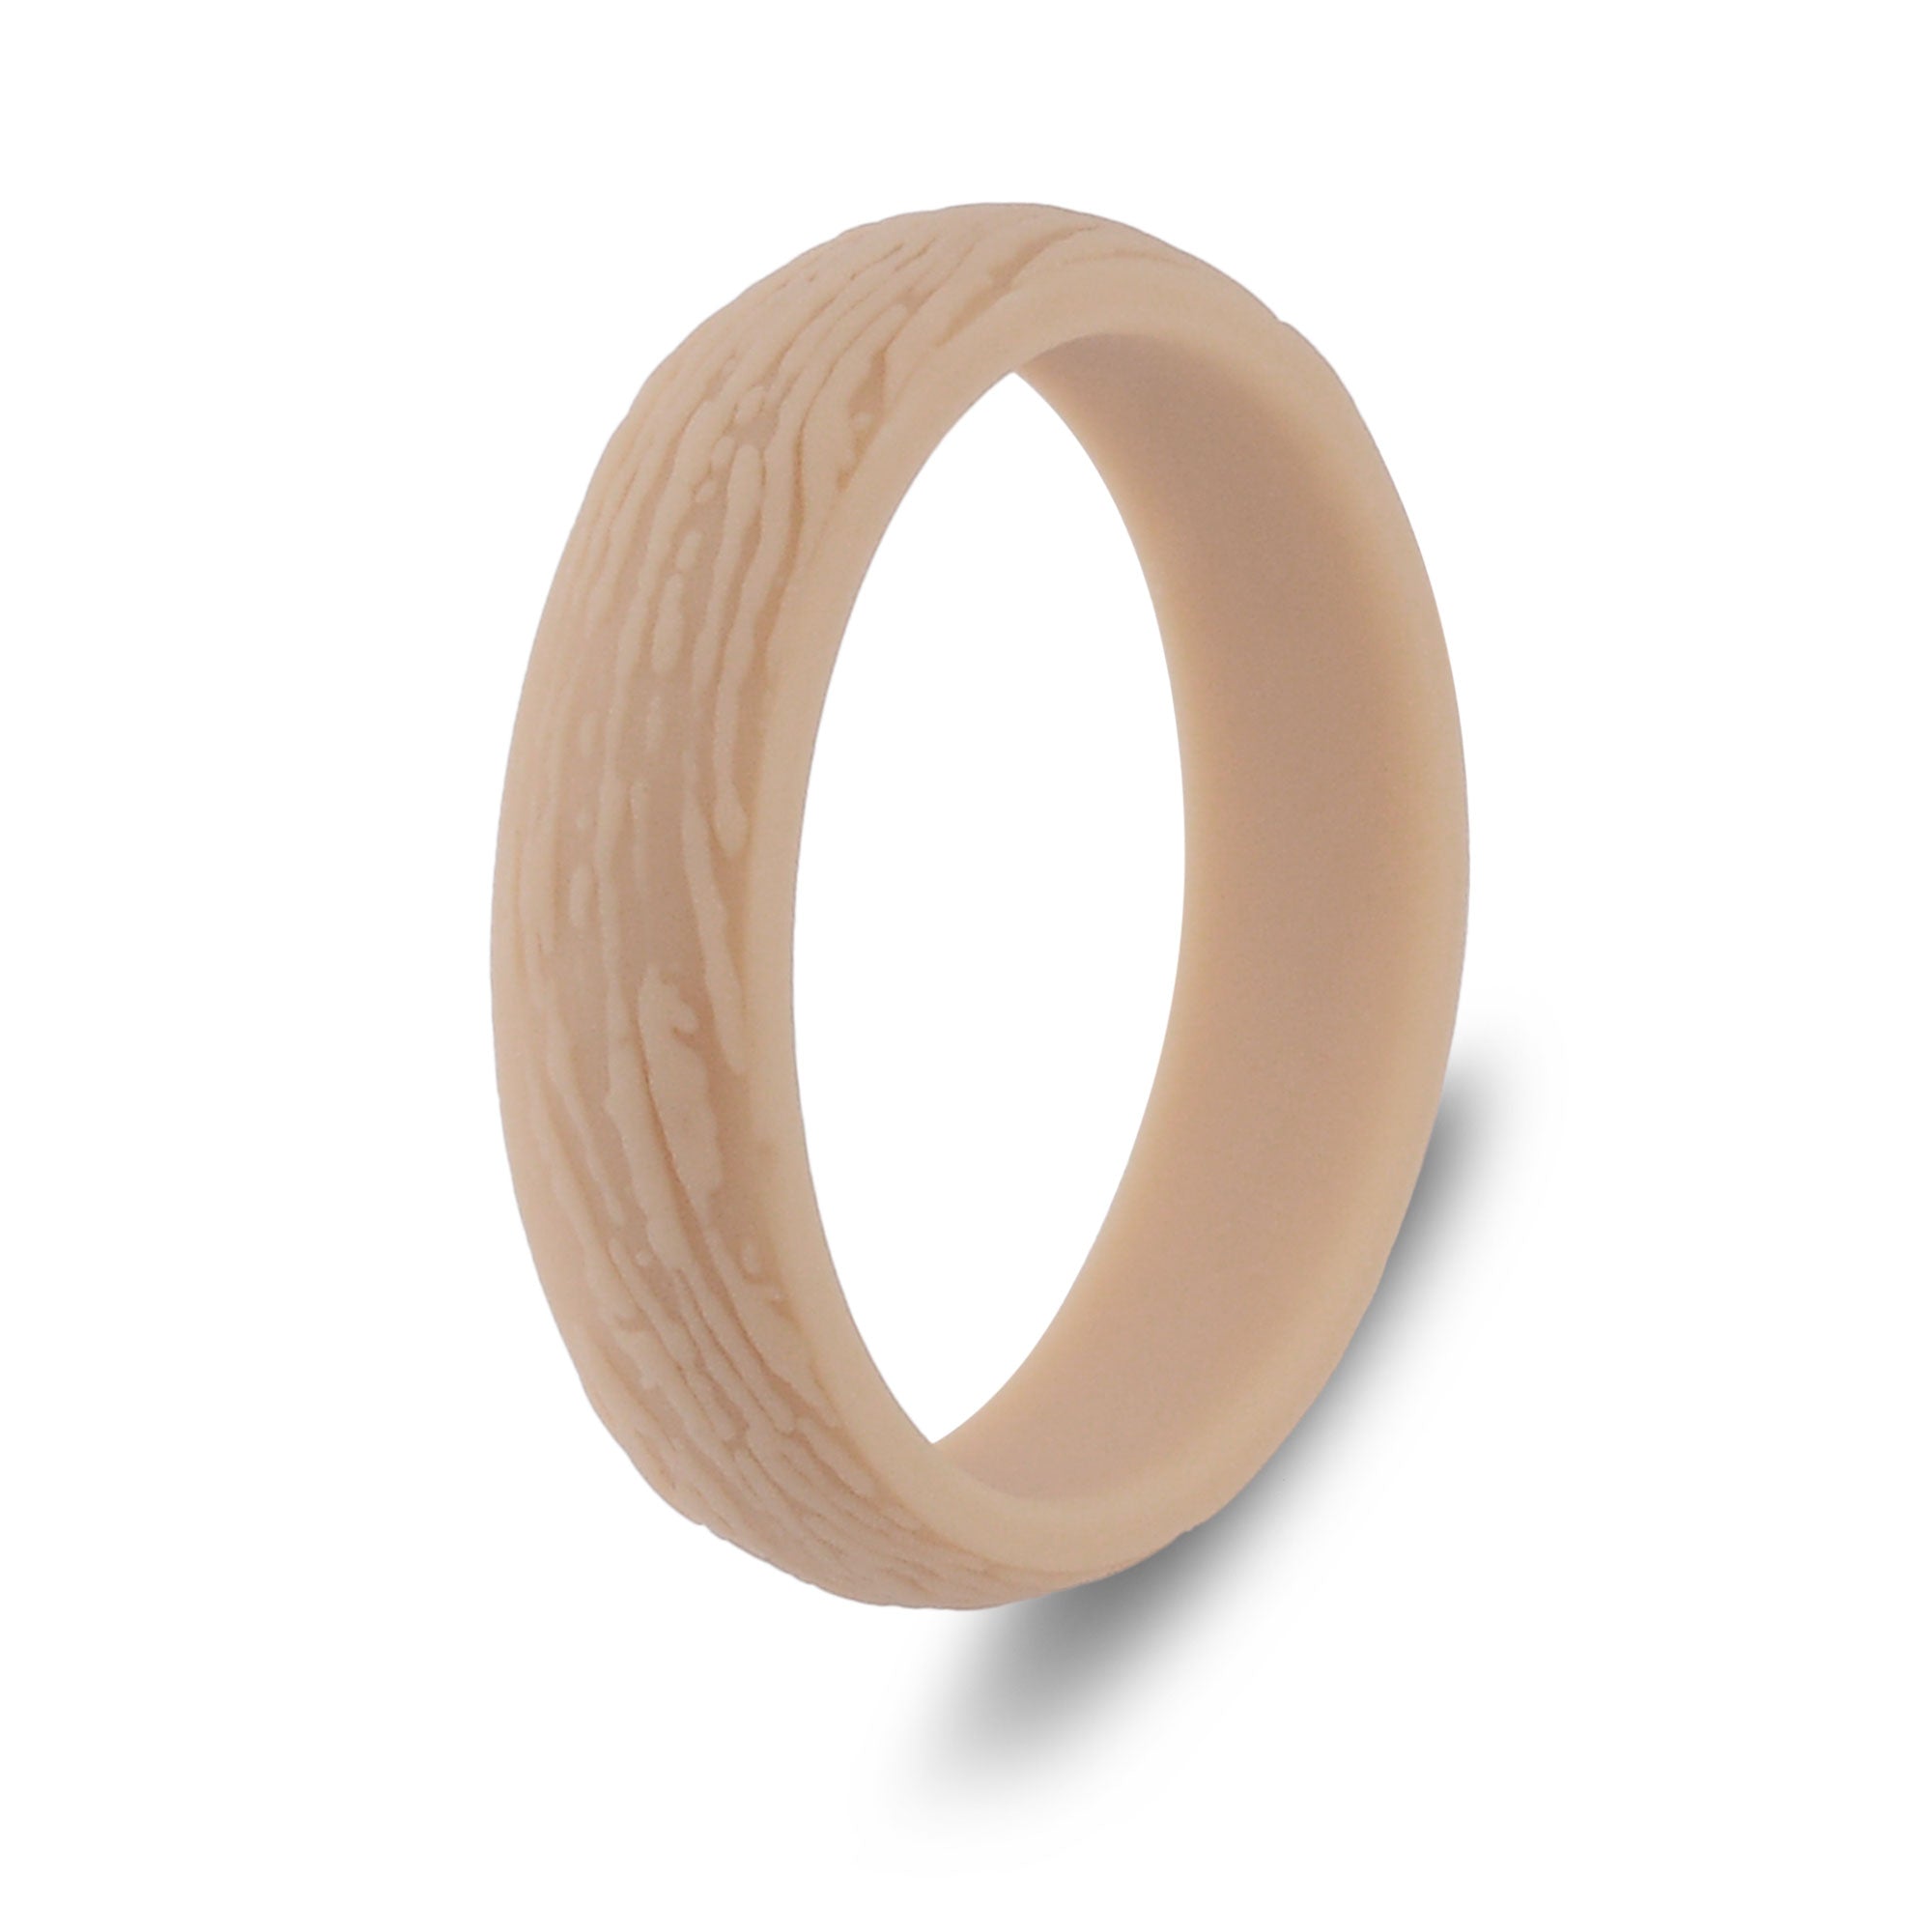 The Birchwood - Silicone Ring